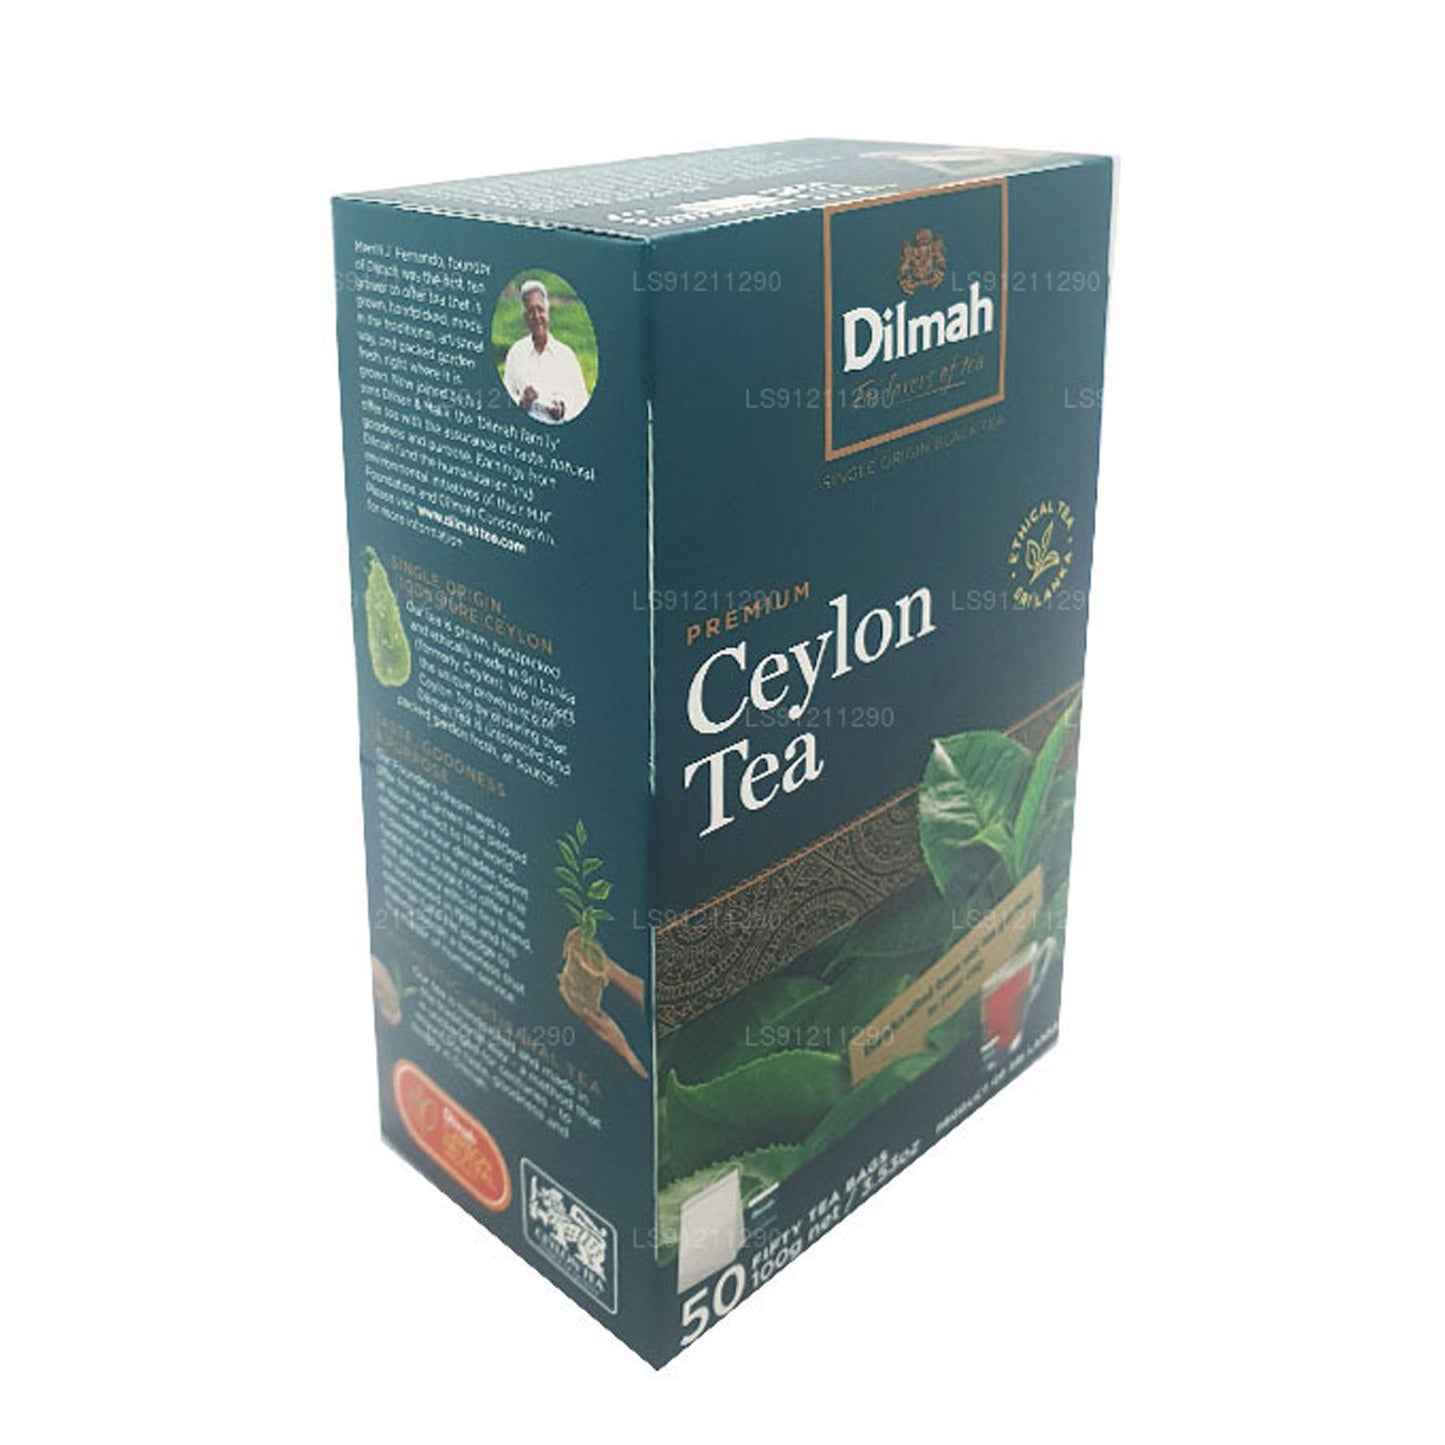 Herbata cejlońska Dilmah Premium